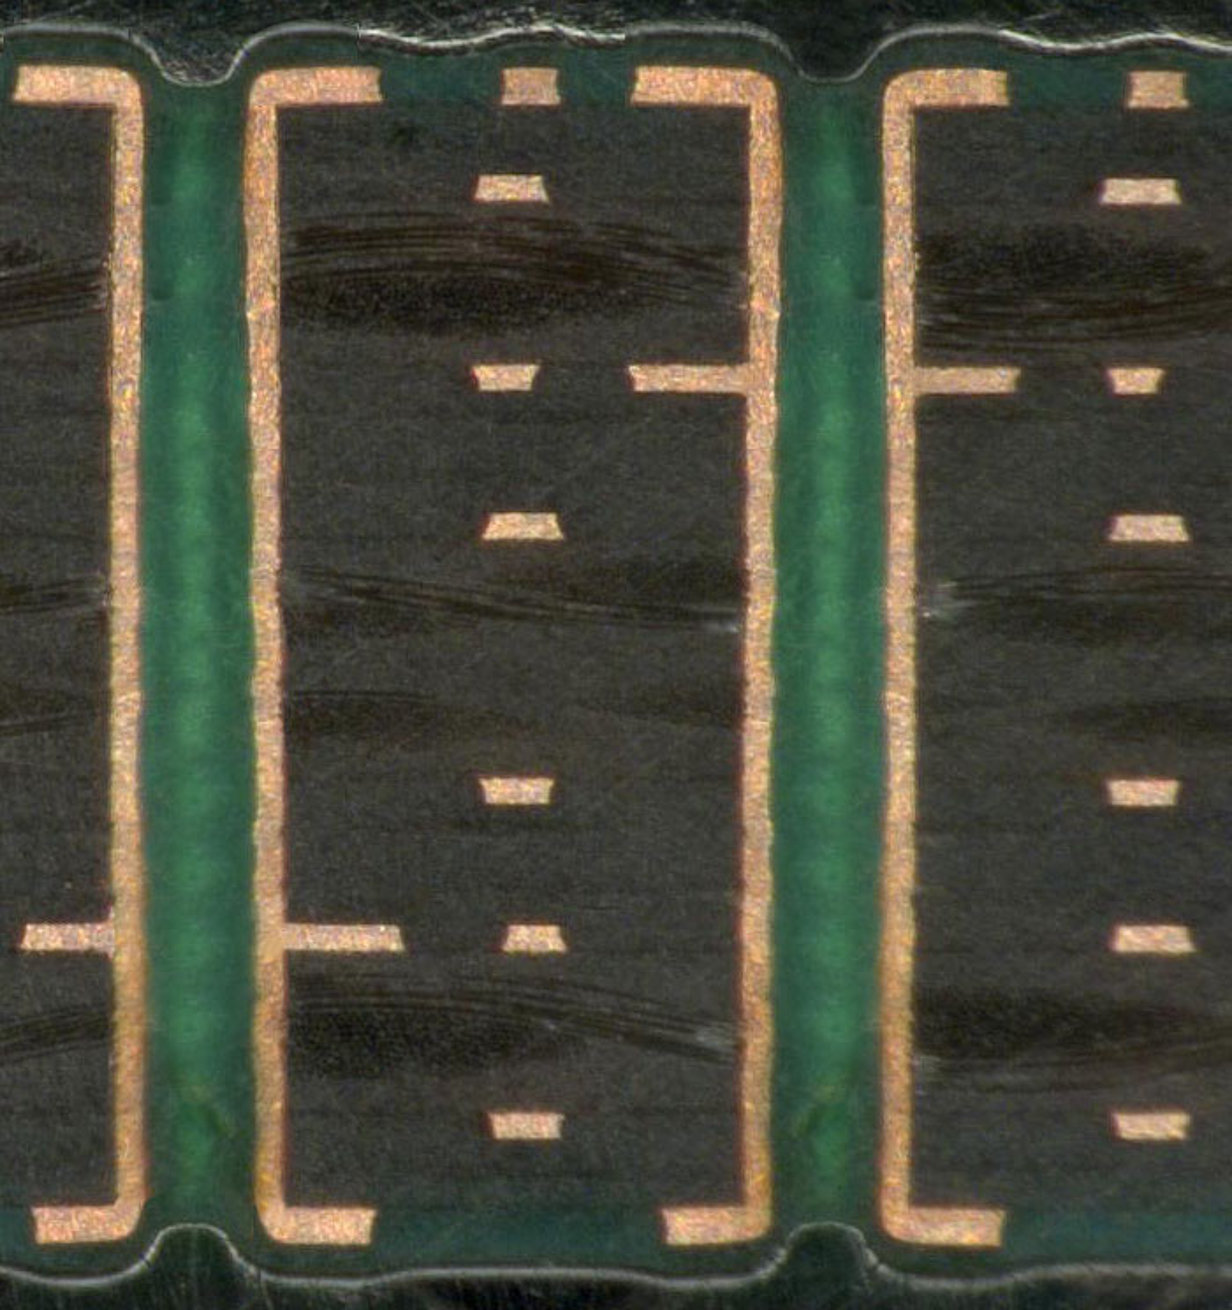 8 Layer Printed Circuit Board Microsection